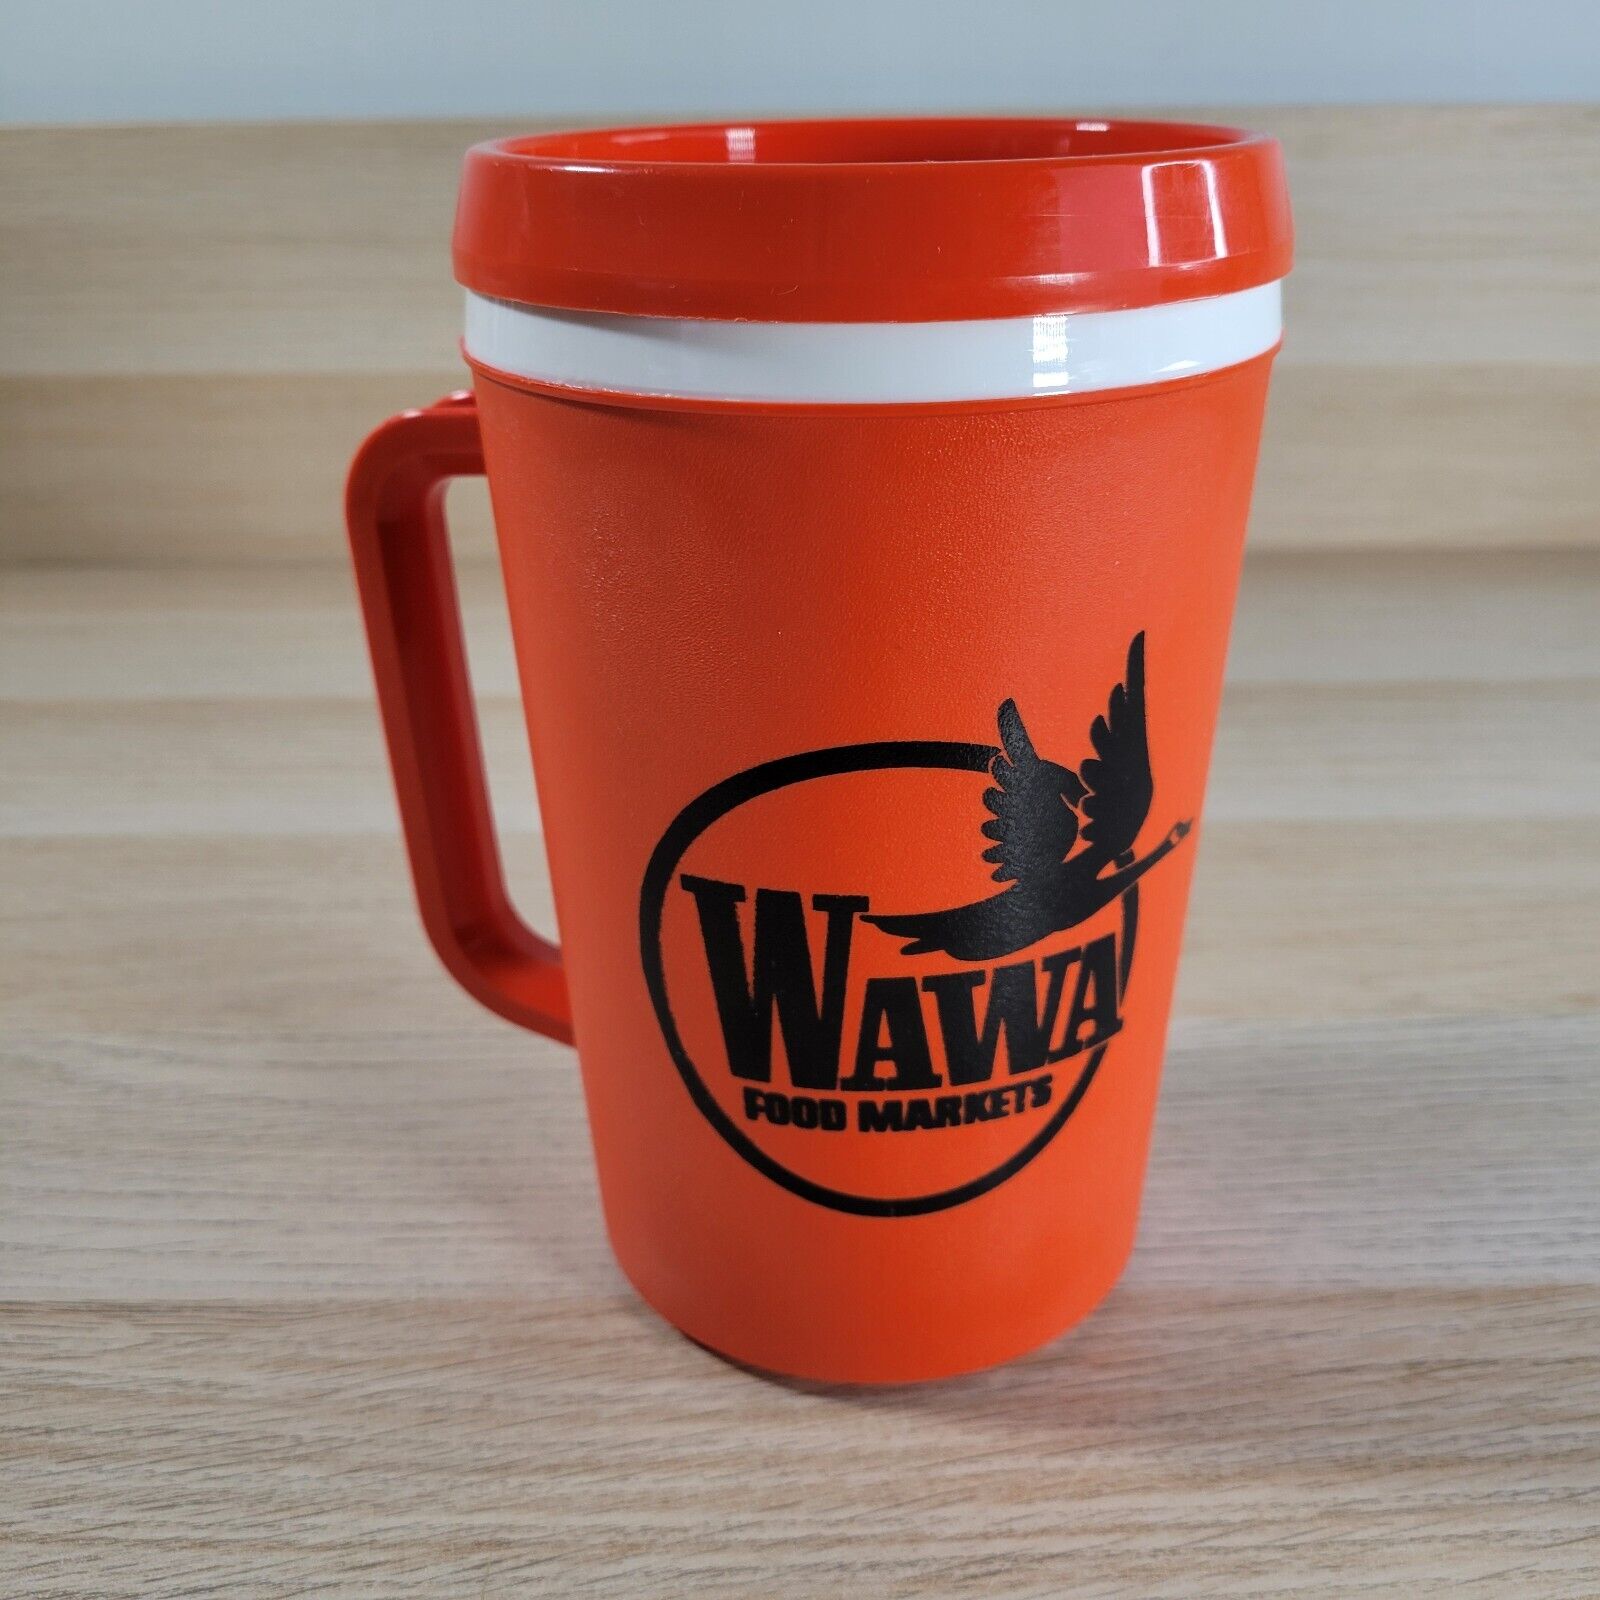 Wawa Food Markets Coffee Mug 32oz Orange Plastic Travel Tumbler Cup VTG Aladdin